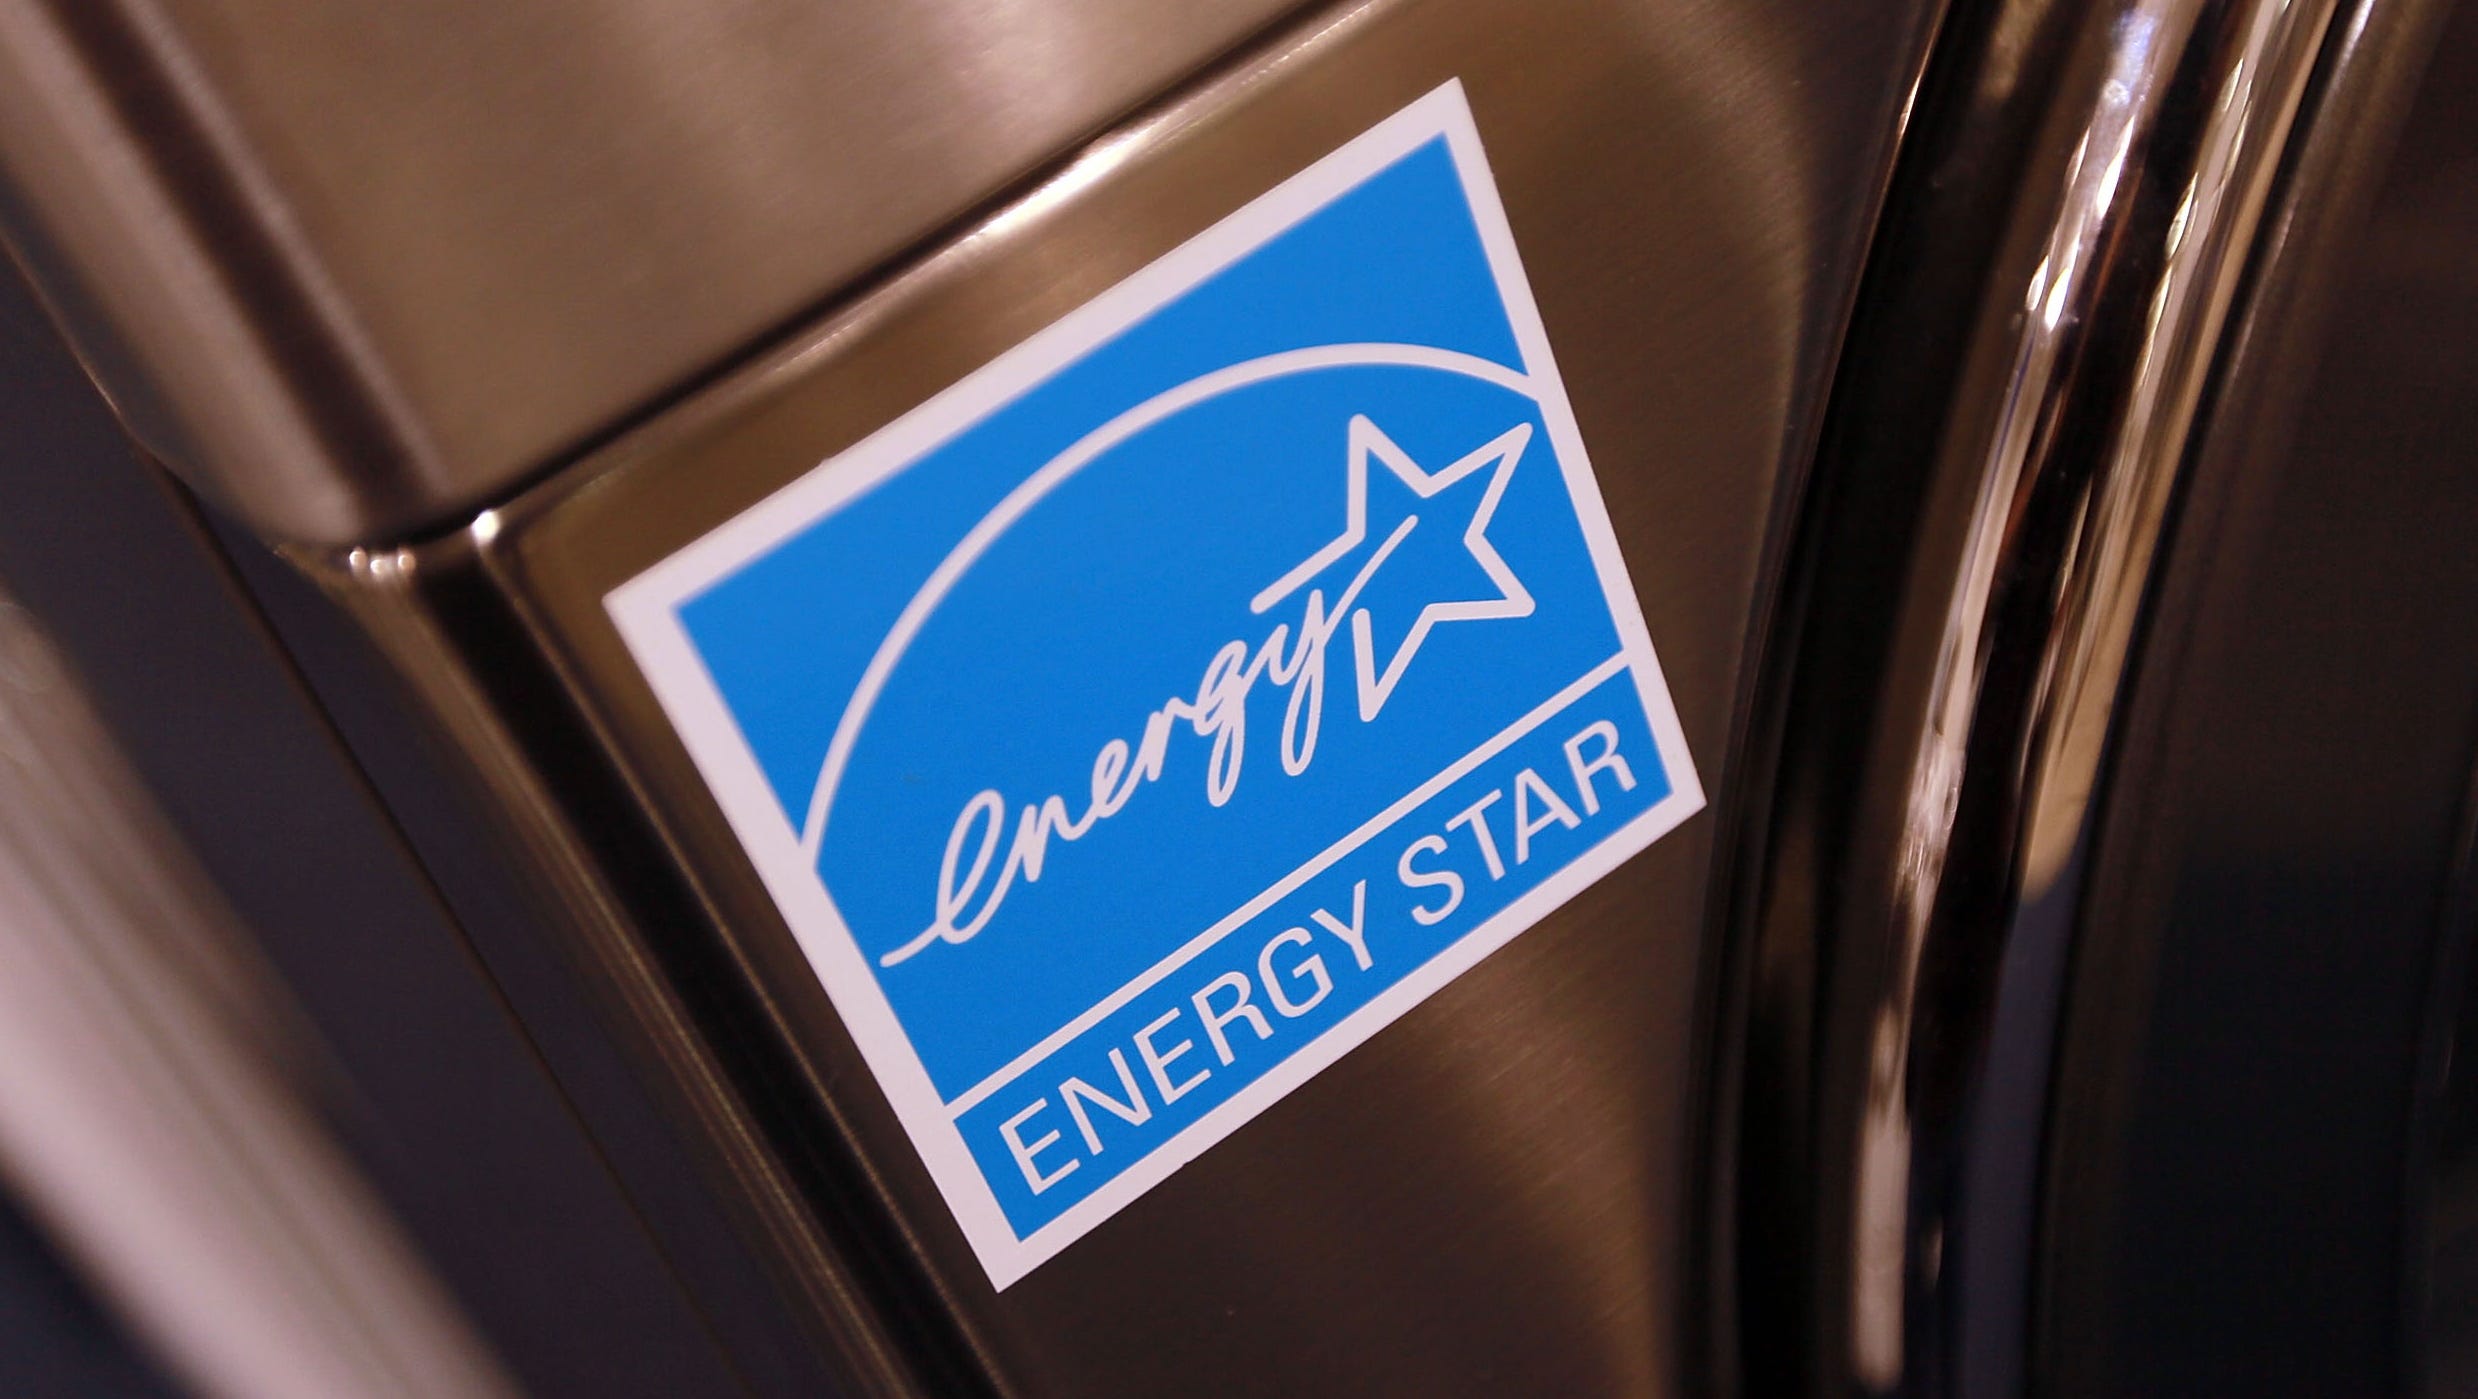 Understanding The Benefits Of The ENERGY STAR Label